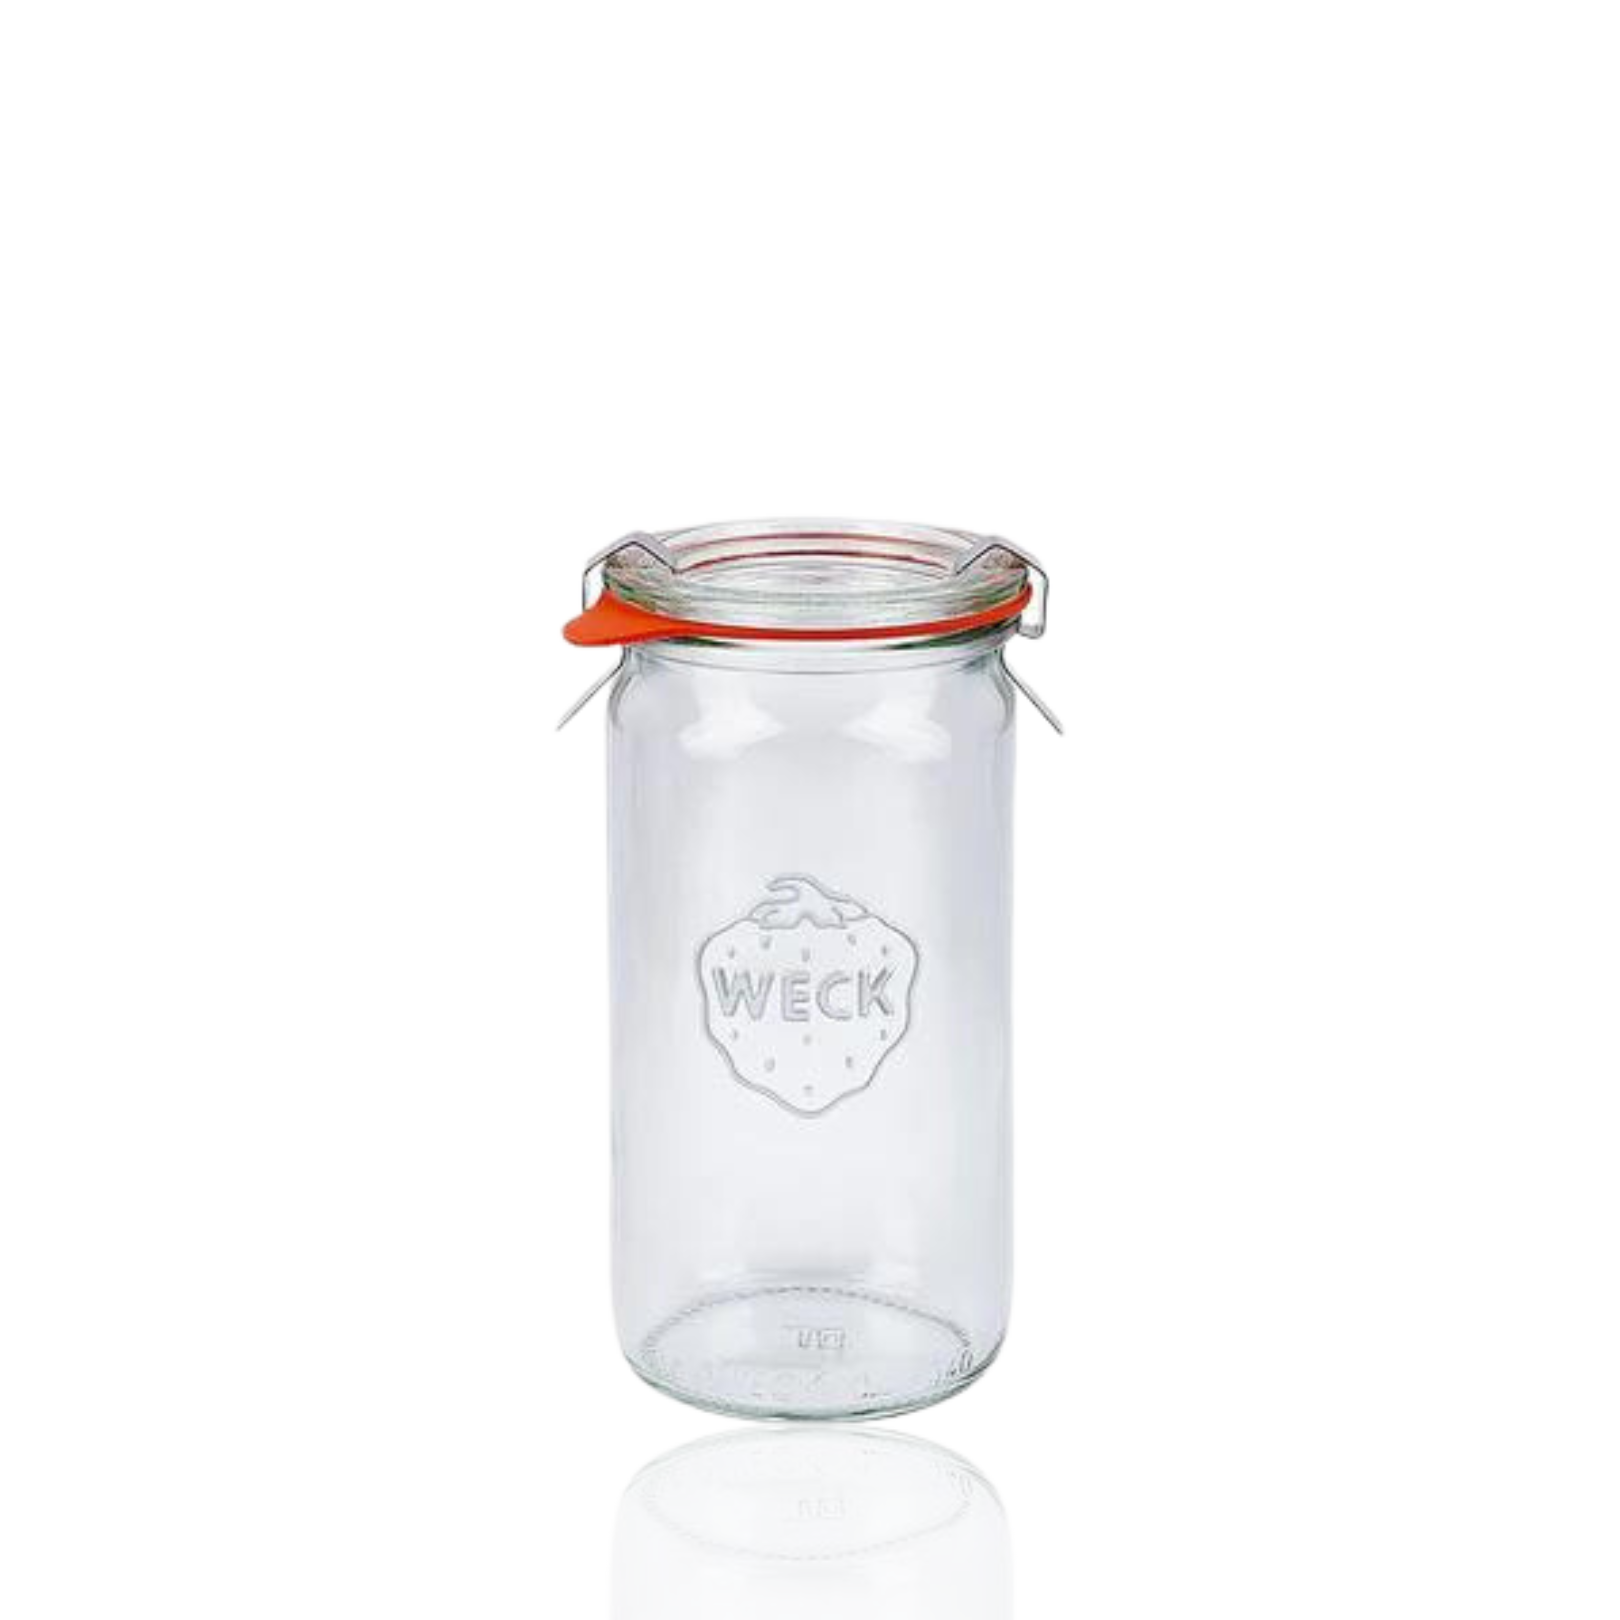 Weck 975 Cylindrical Jar - 340ml 